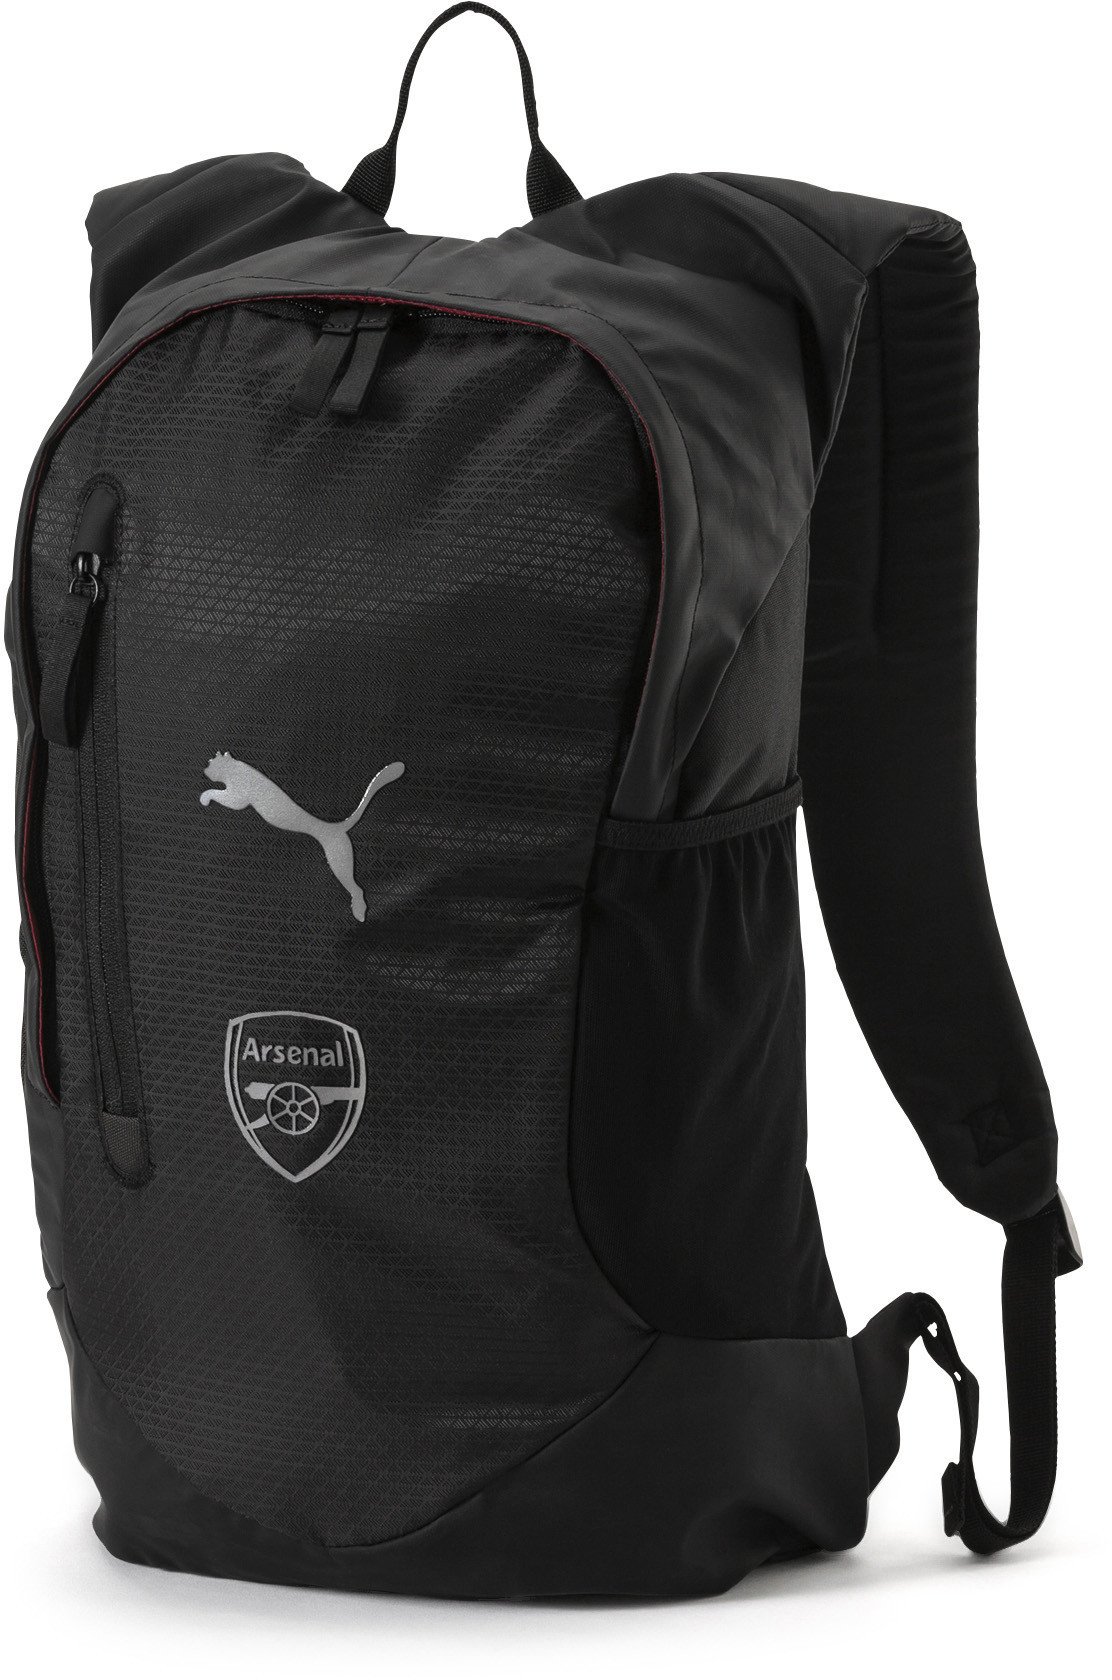 Mochila Puma Arsenal Performance Backpack